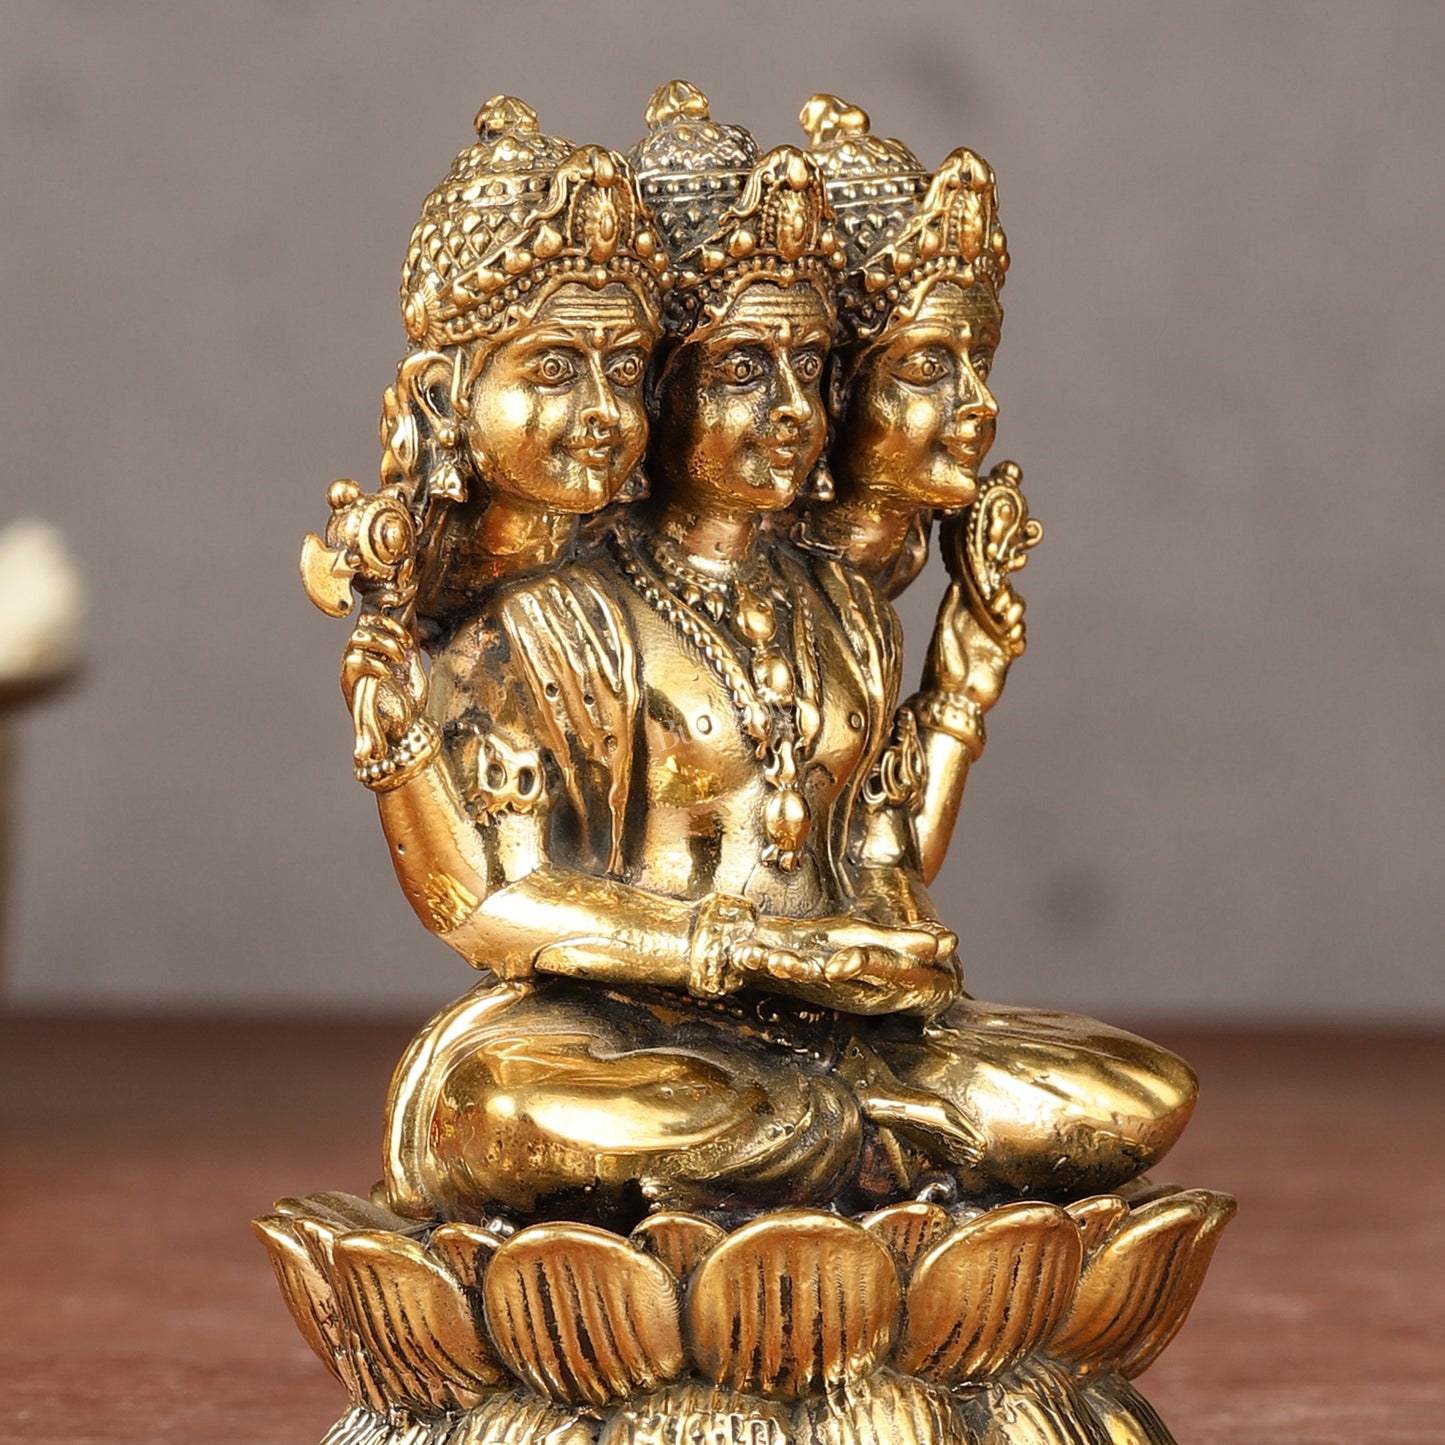 Seated Lord Brahma Lightweight Brass Idol - 3.5-inch